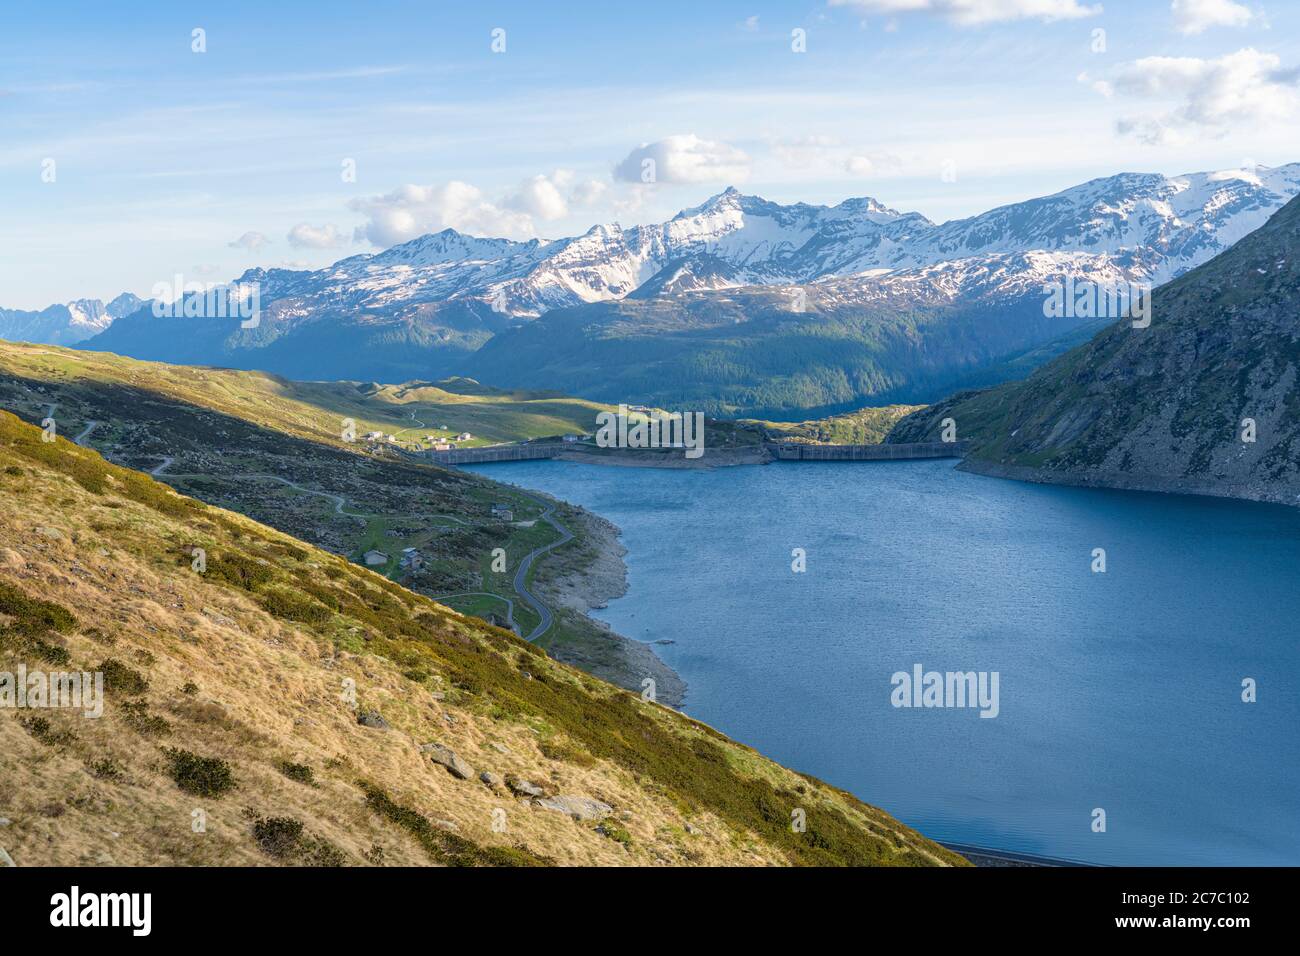 Montespluga lake with snow capped mountains in background, Madesimo, Valchiavenna, Valle Spluga, Valtellina, Lombardy, Italy Stock Photo